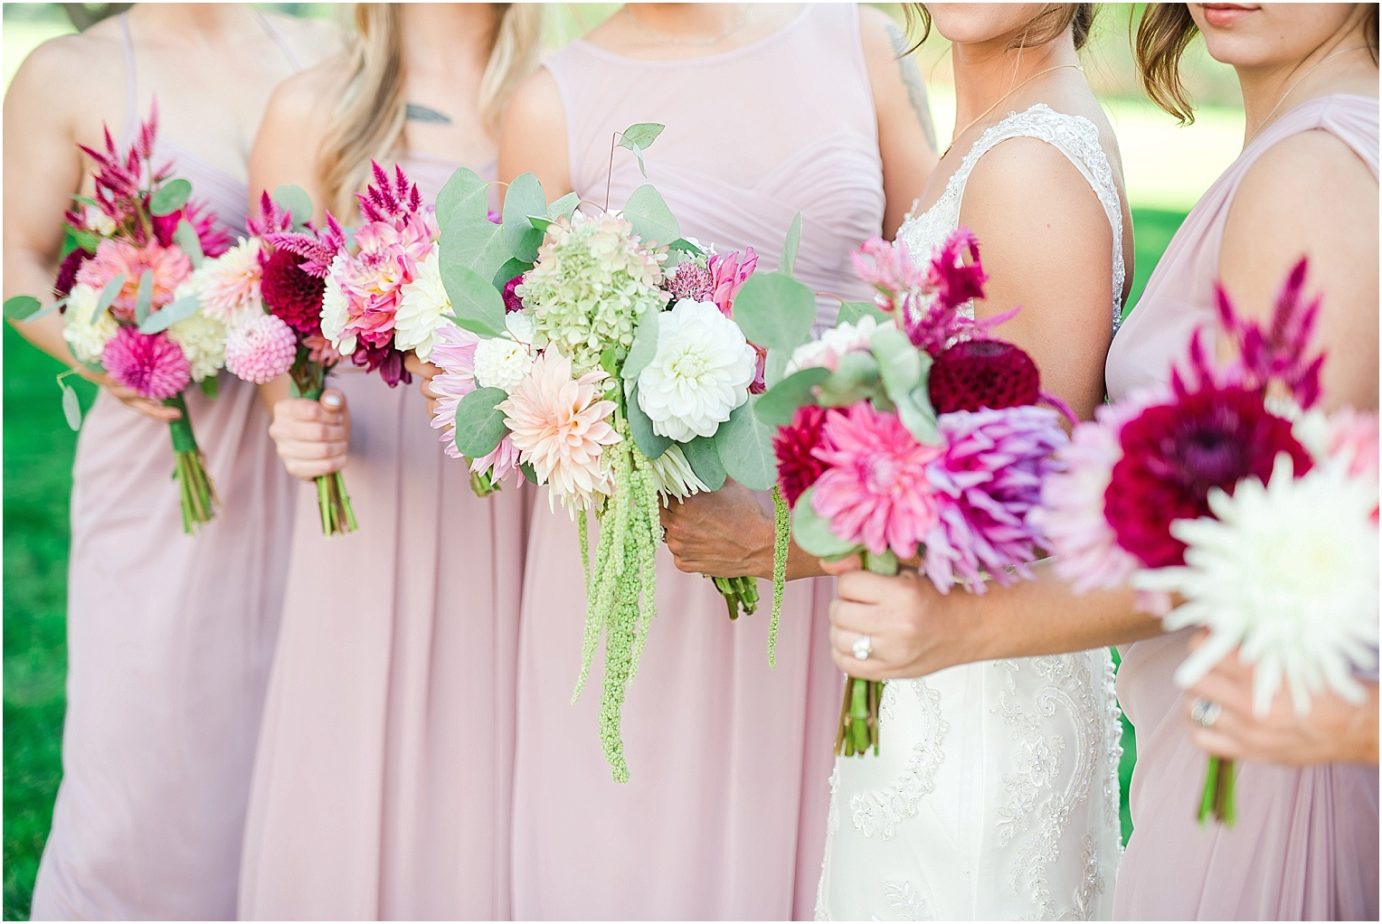 Favorite wedding flowers of 2017 For brides pink wedding flowers